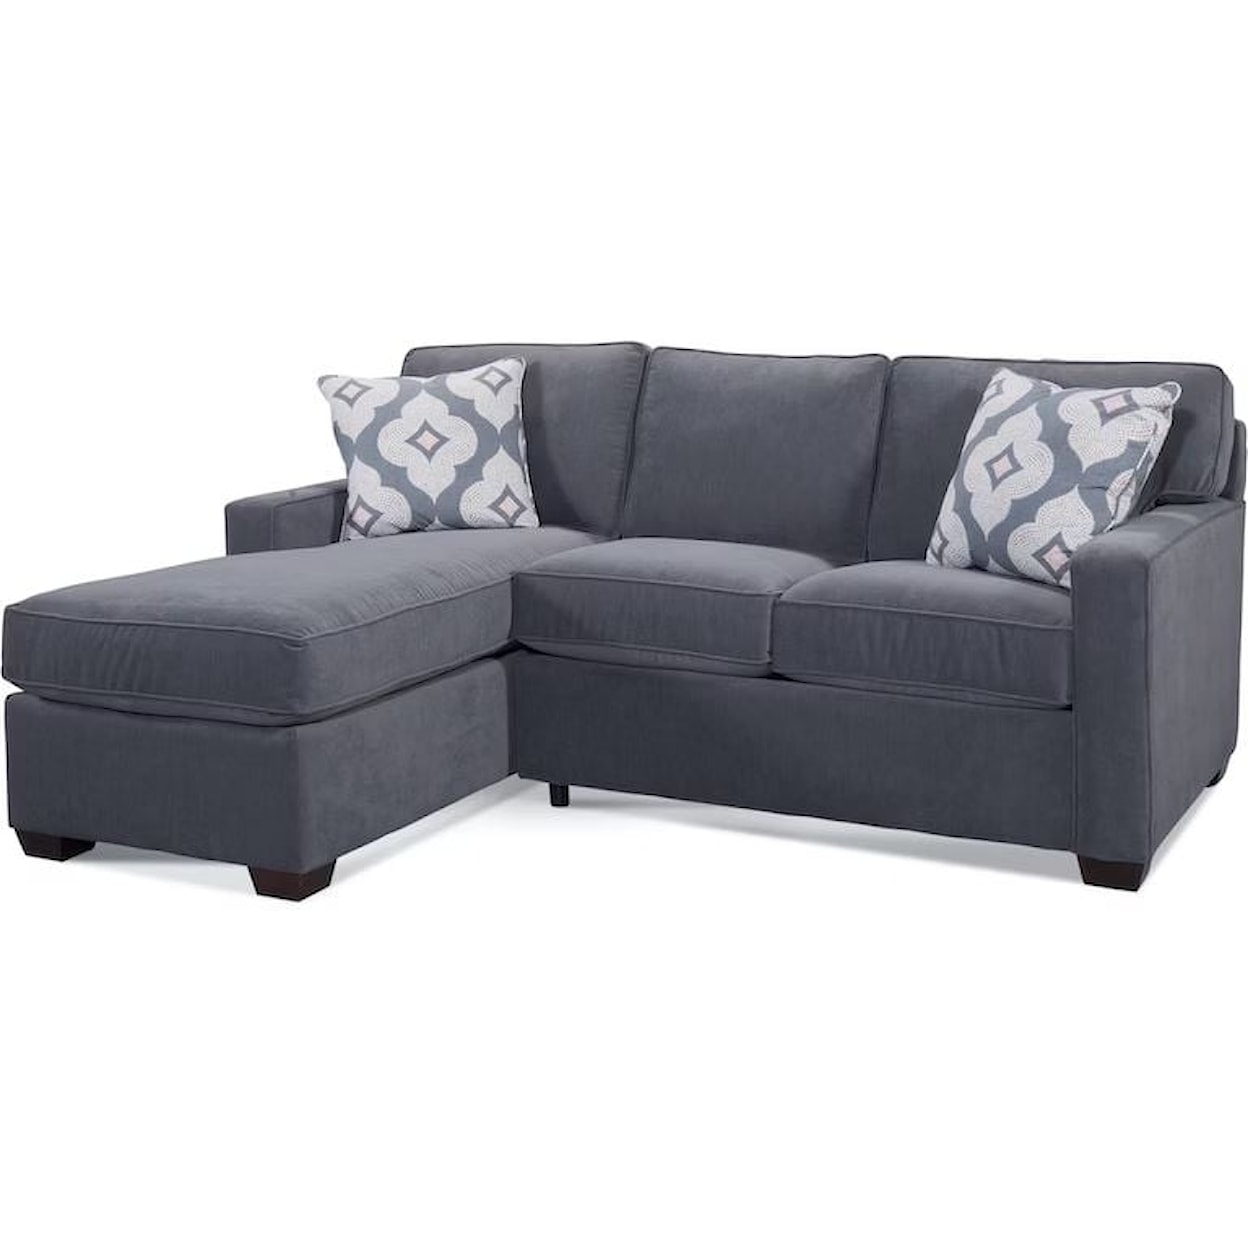 Braxton Culler Gramercy Park Sectional Sofa